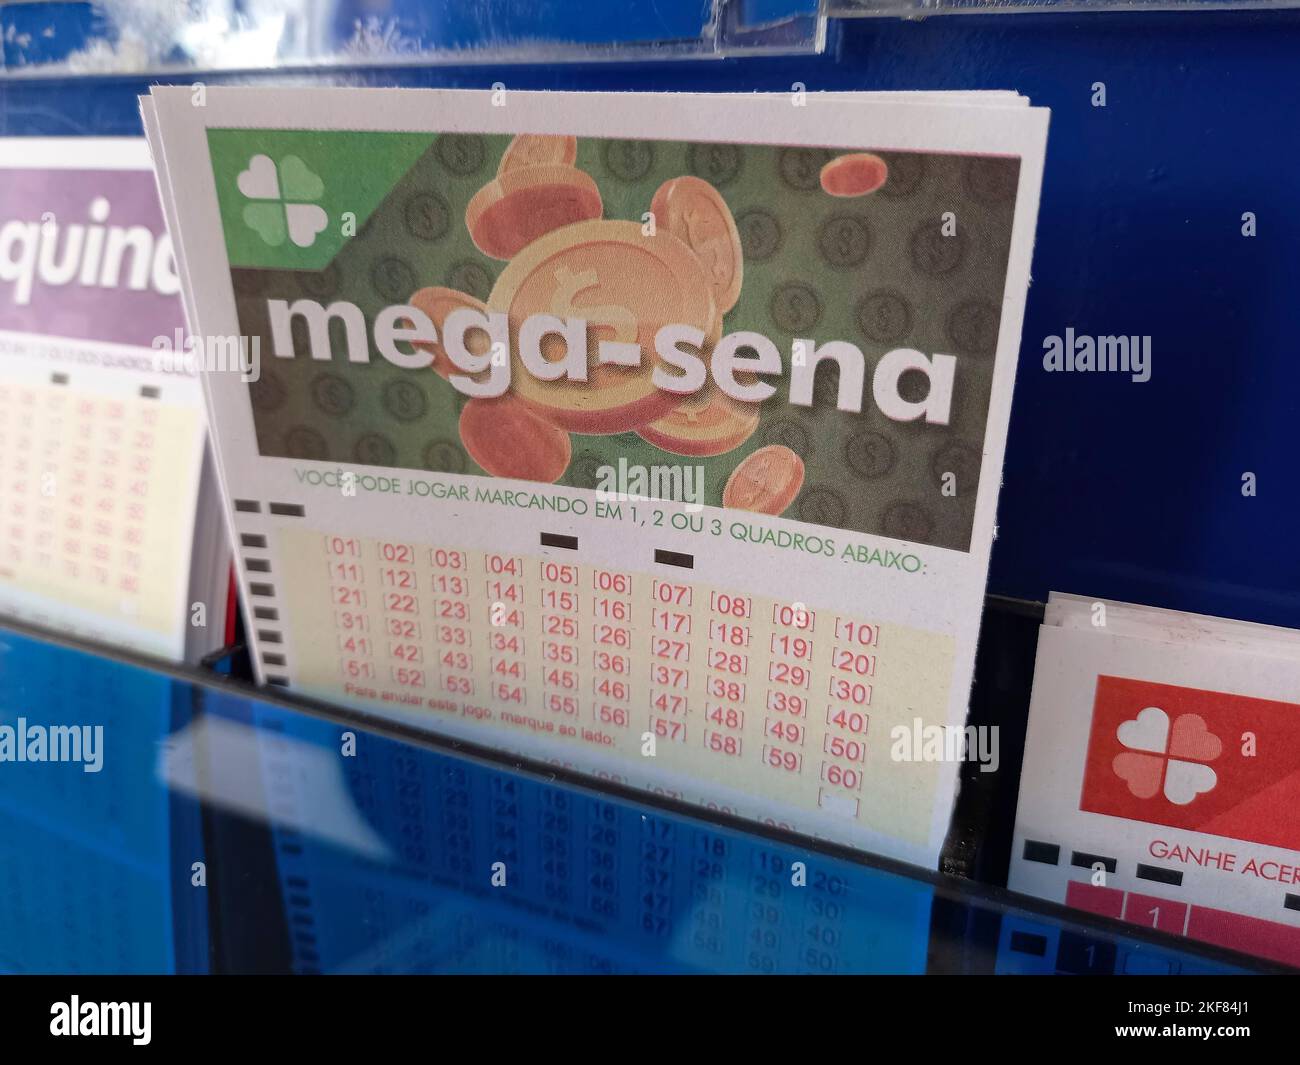 The Intriguing Double Win at Brazil's Mega-Sena Lottery